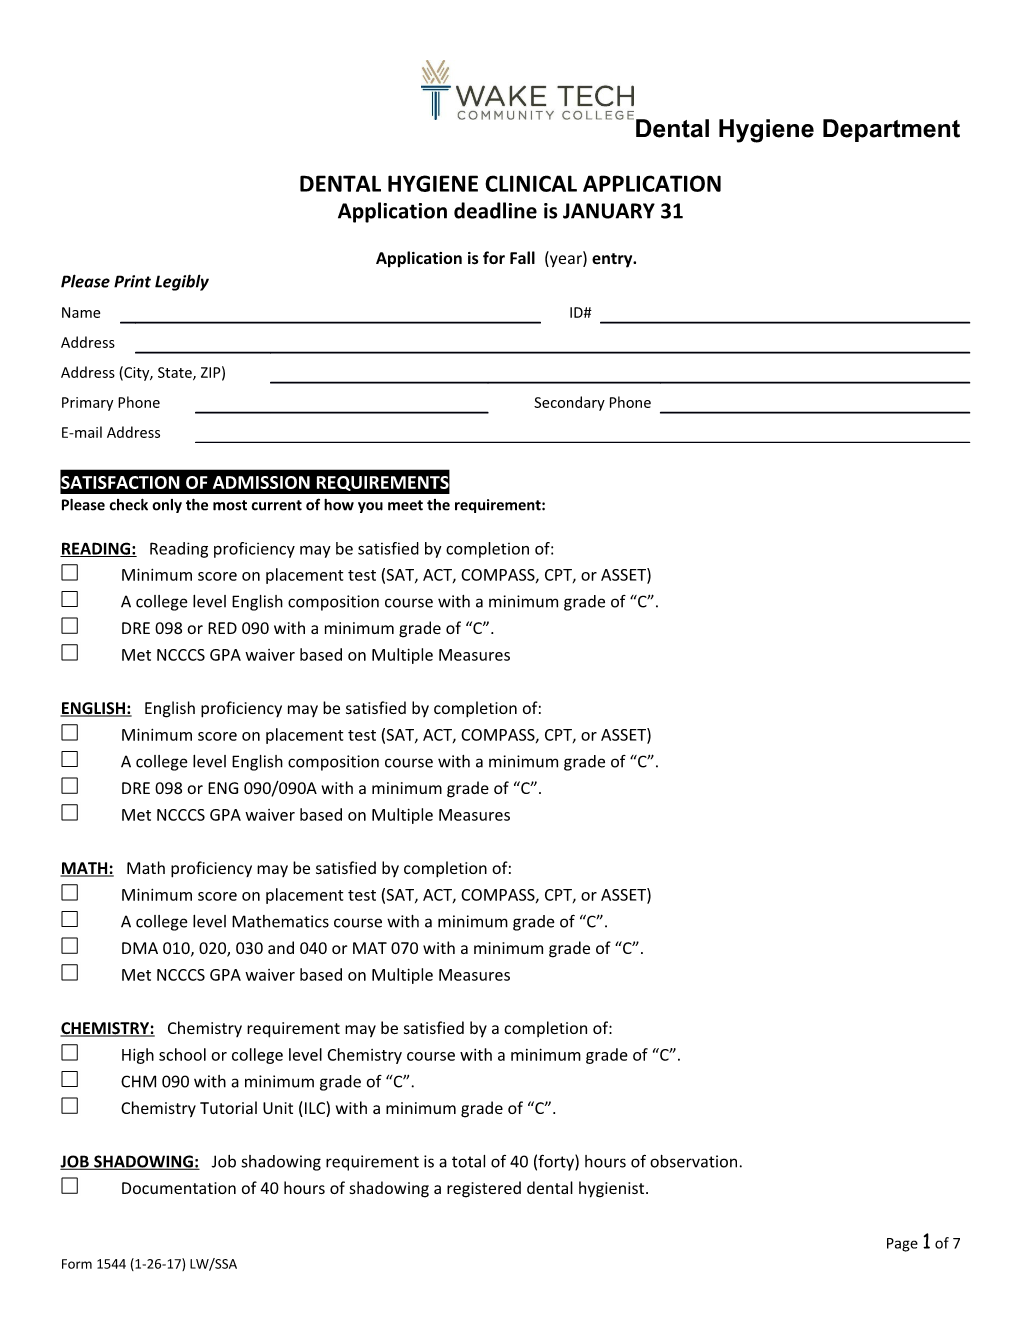 Dental Hygiene Clinical Application